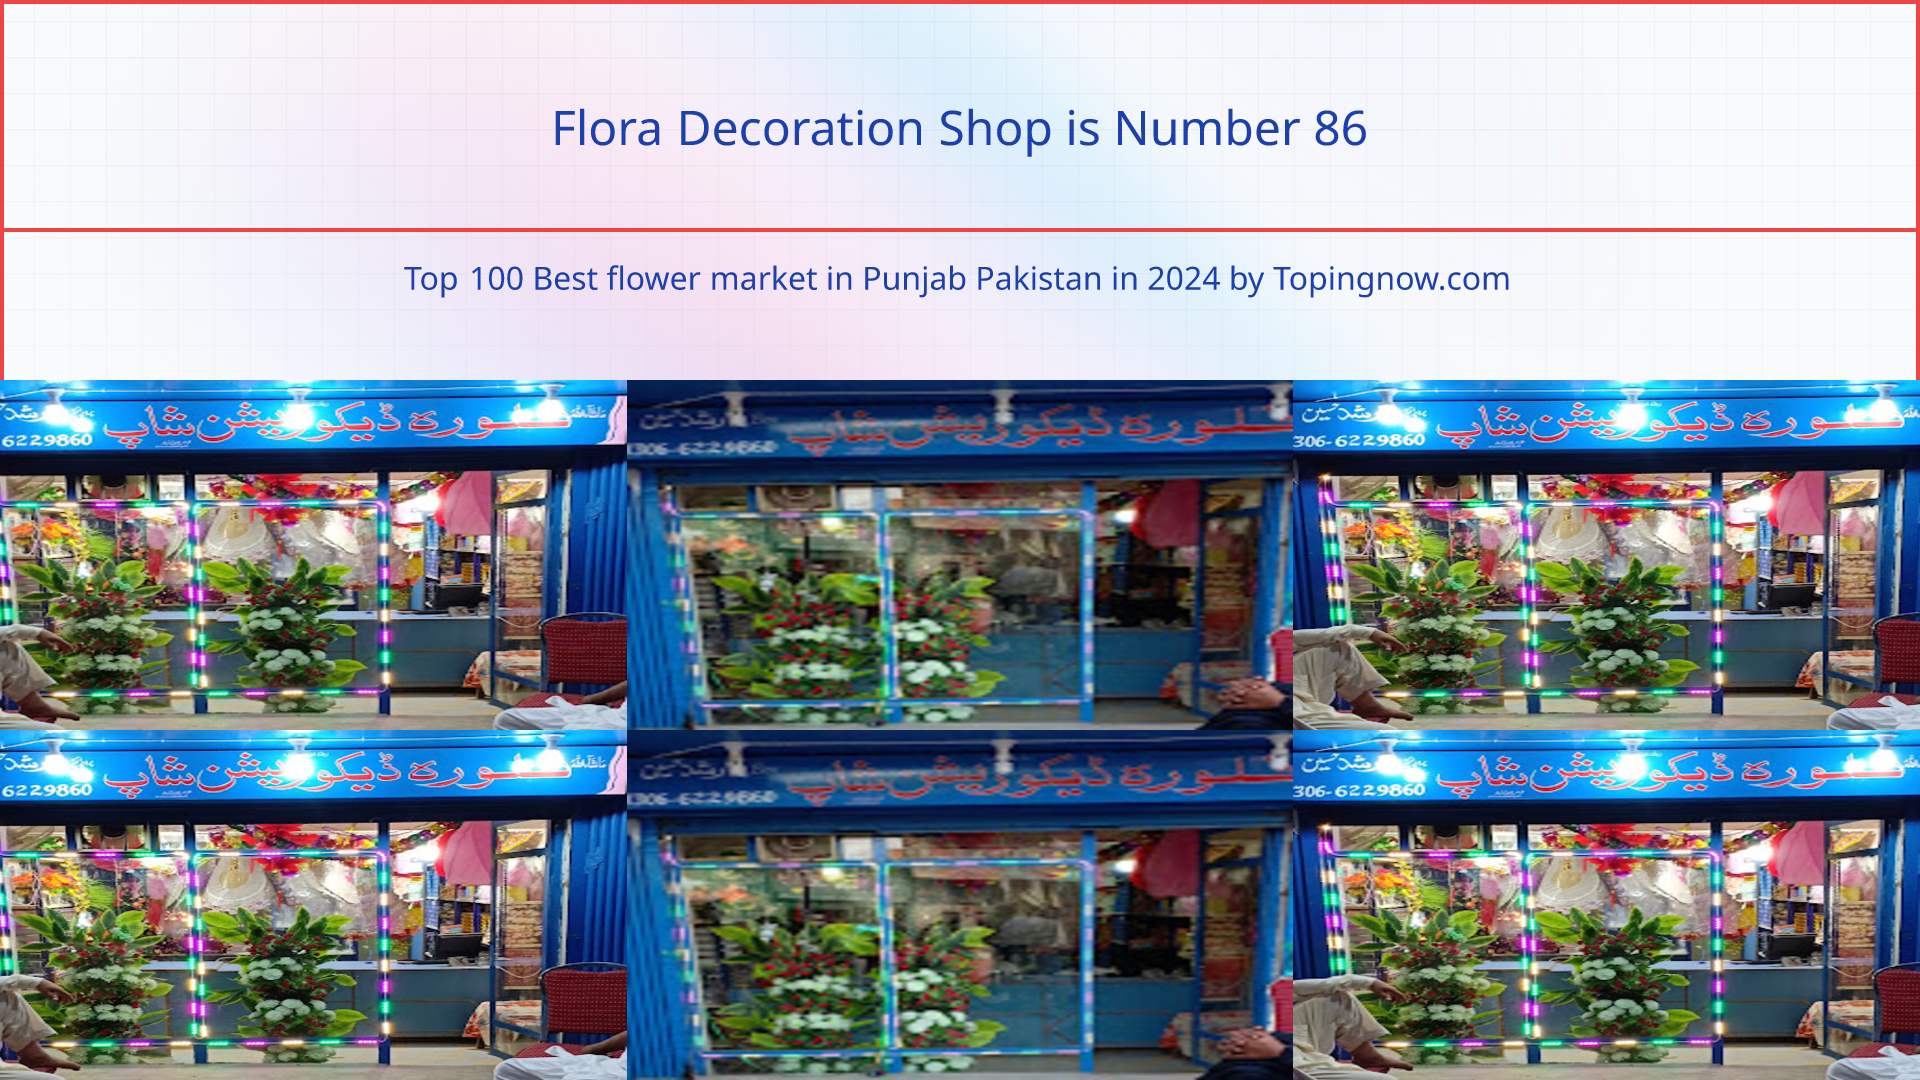 Flora Decoration Shop: Top 100 Best flower market in Punjab Pakistan in 2024